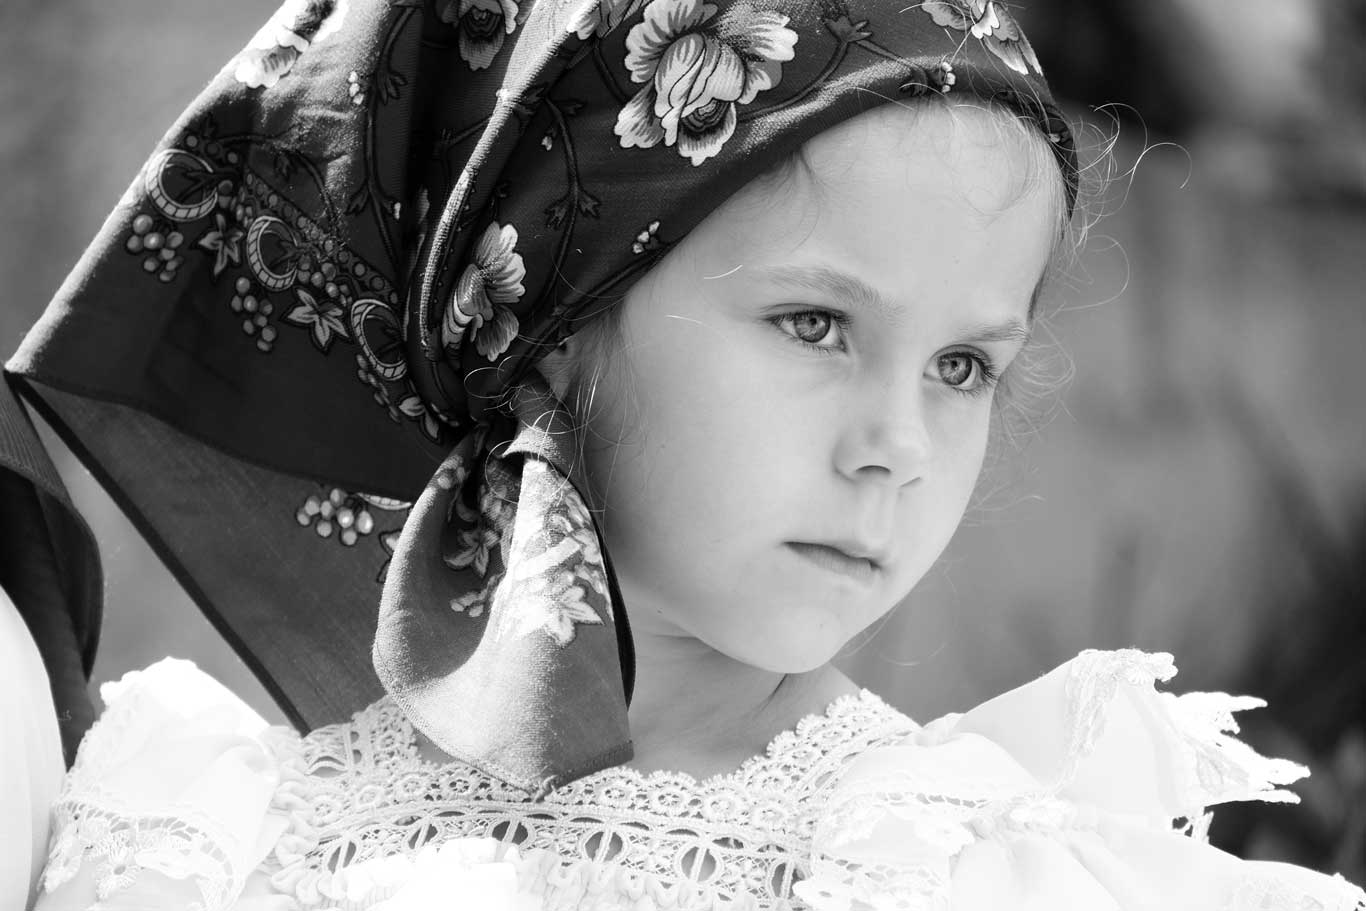 Roumanie-Maramures-La petite fille du cimetiere